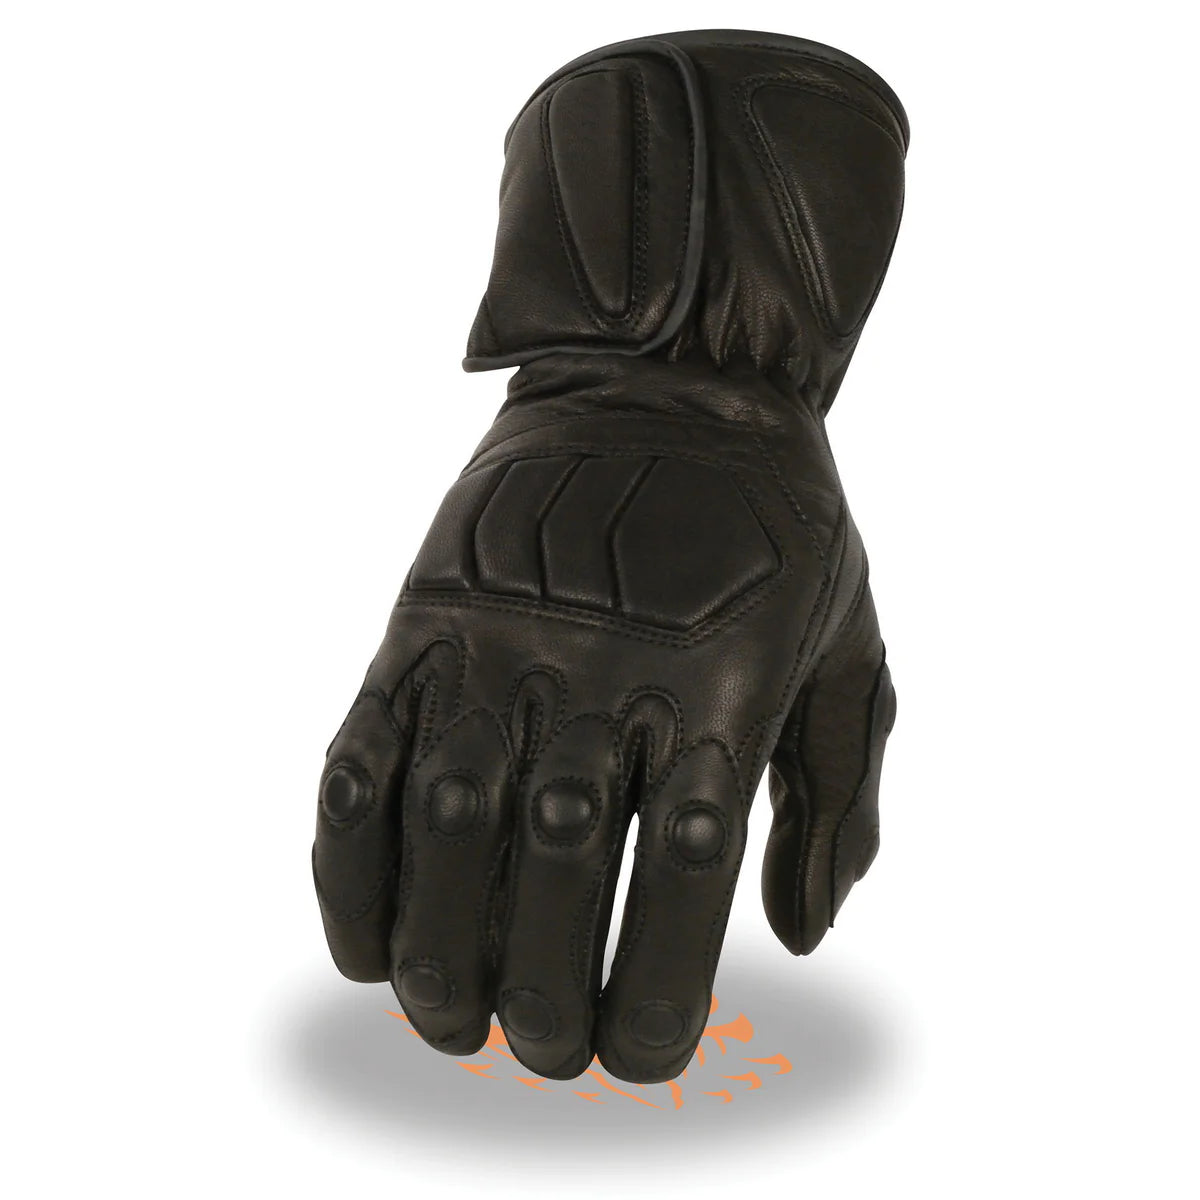 Men's Black Leather Waterproof Gauntlet Motorcycle Hand Gloves W/ Extra Grip Reinforced Gel Padded Palm.